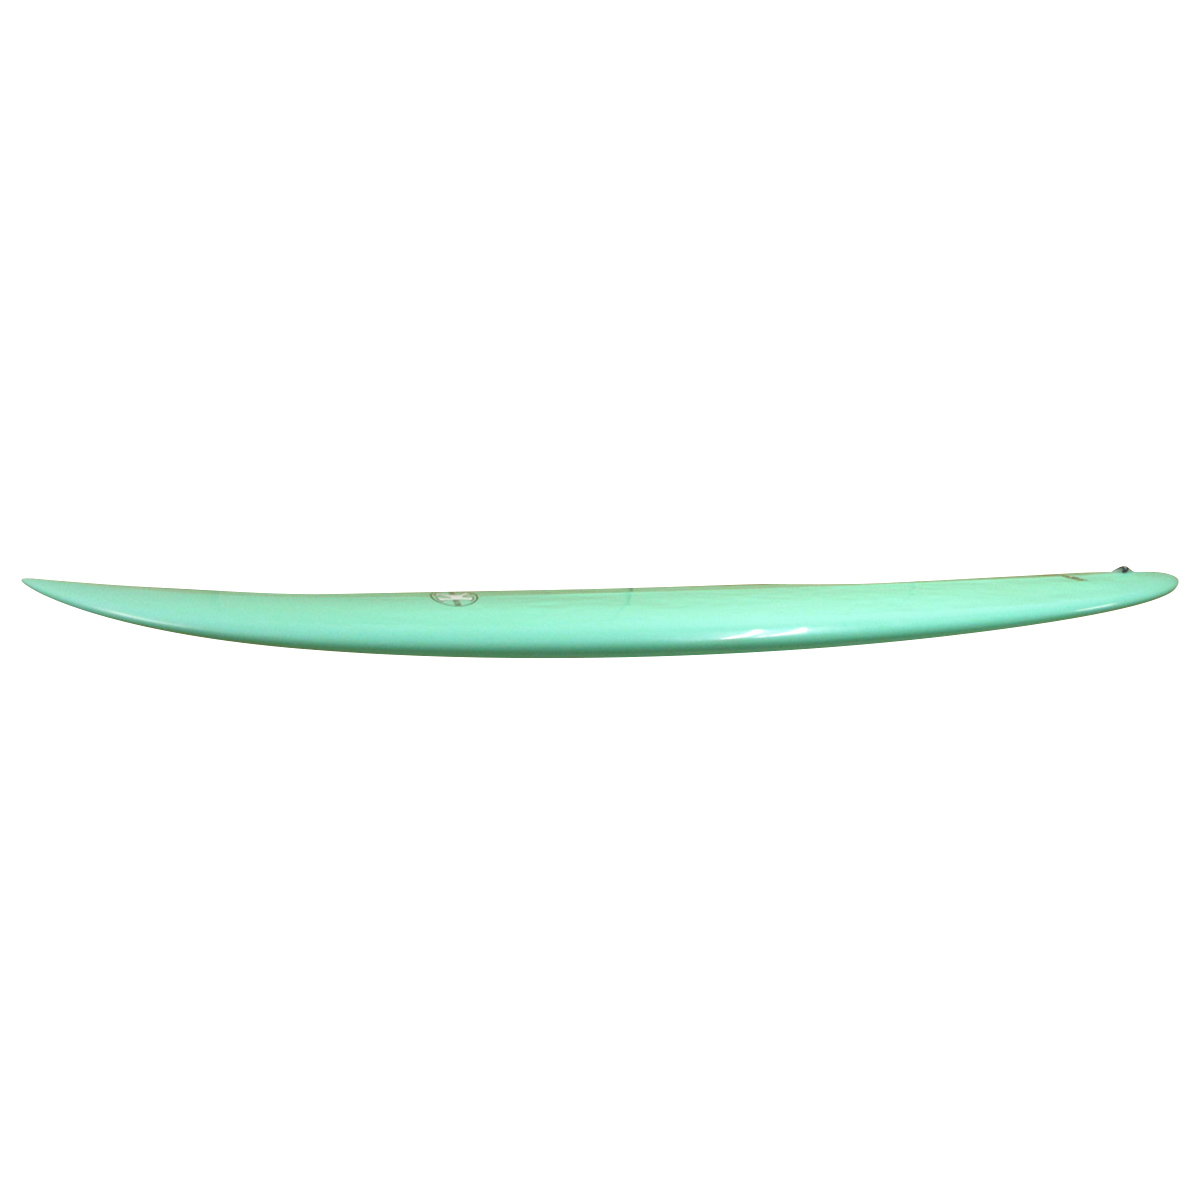 Kugenuma Surfboards / Egg 6`6